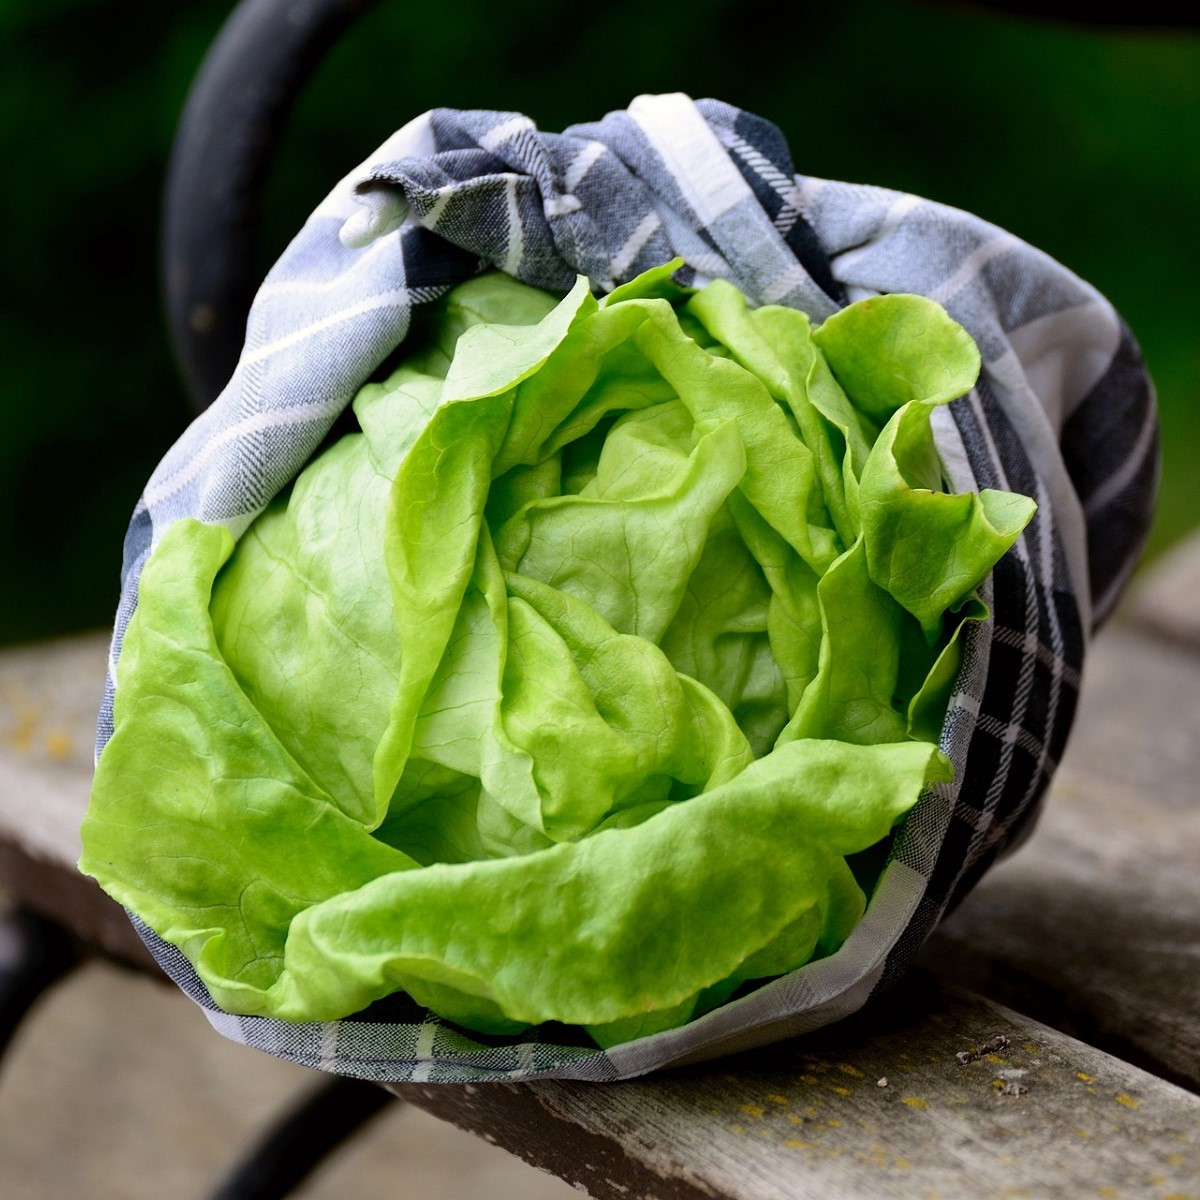 BIO Salát ledový Saladin - Lactuca sativa - bio semena salátu - 100 ks